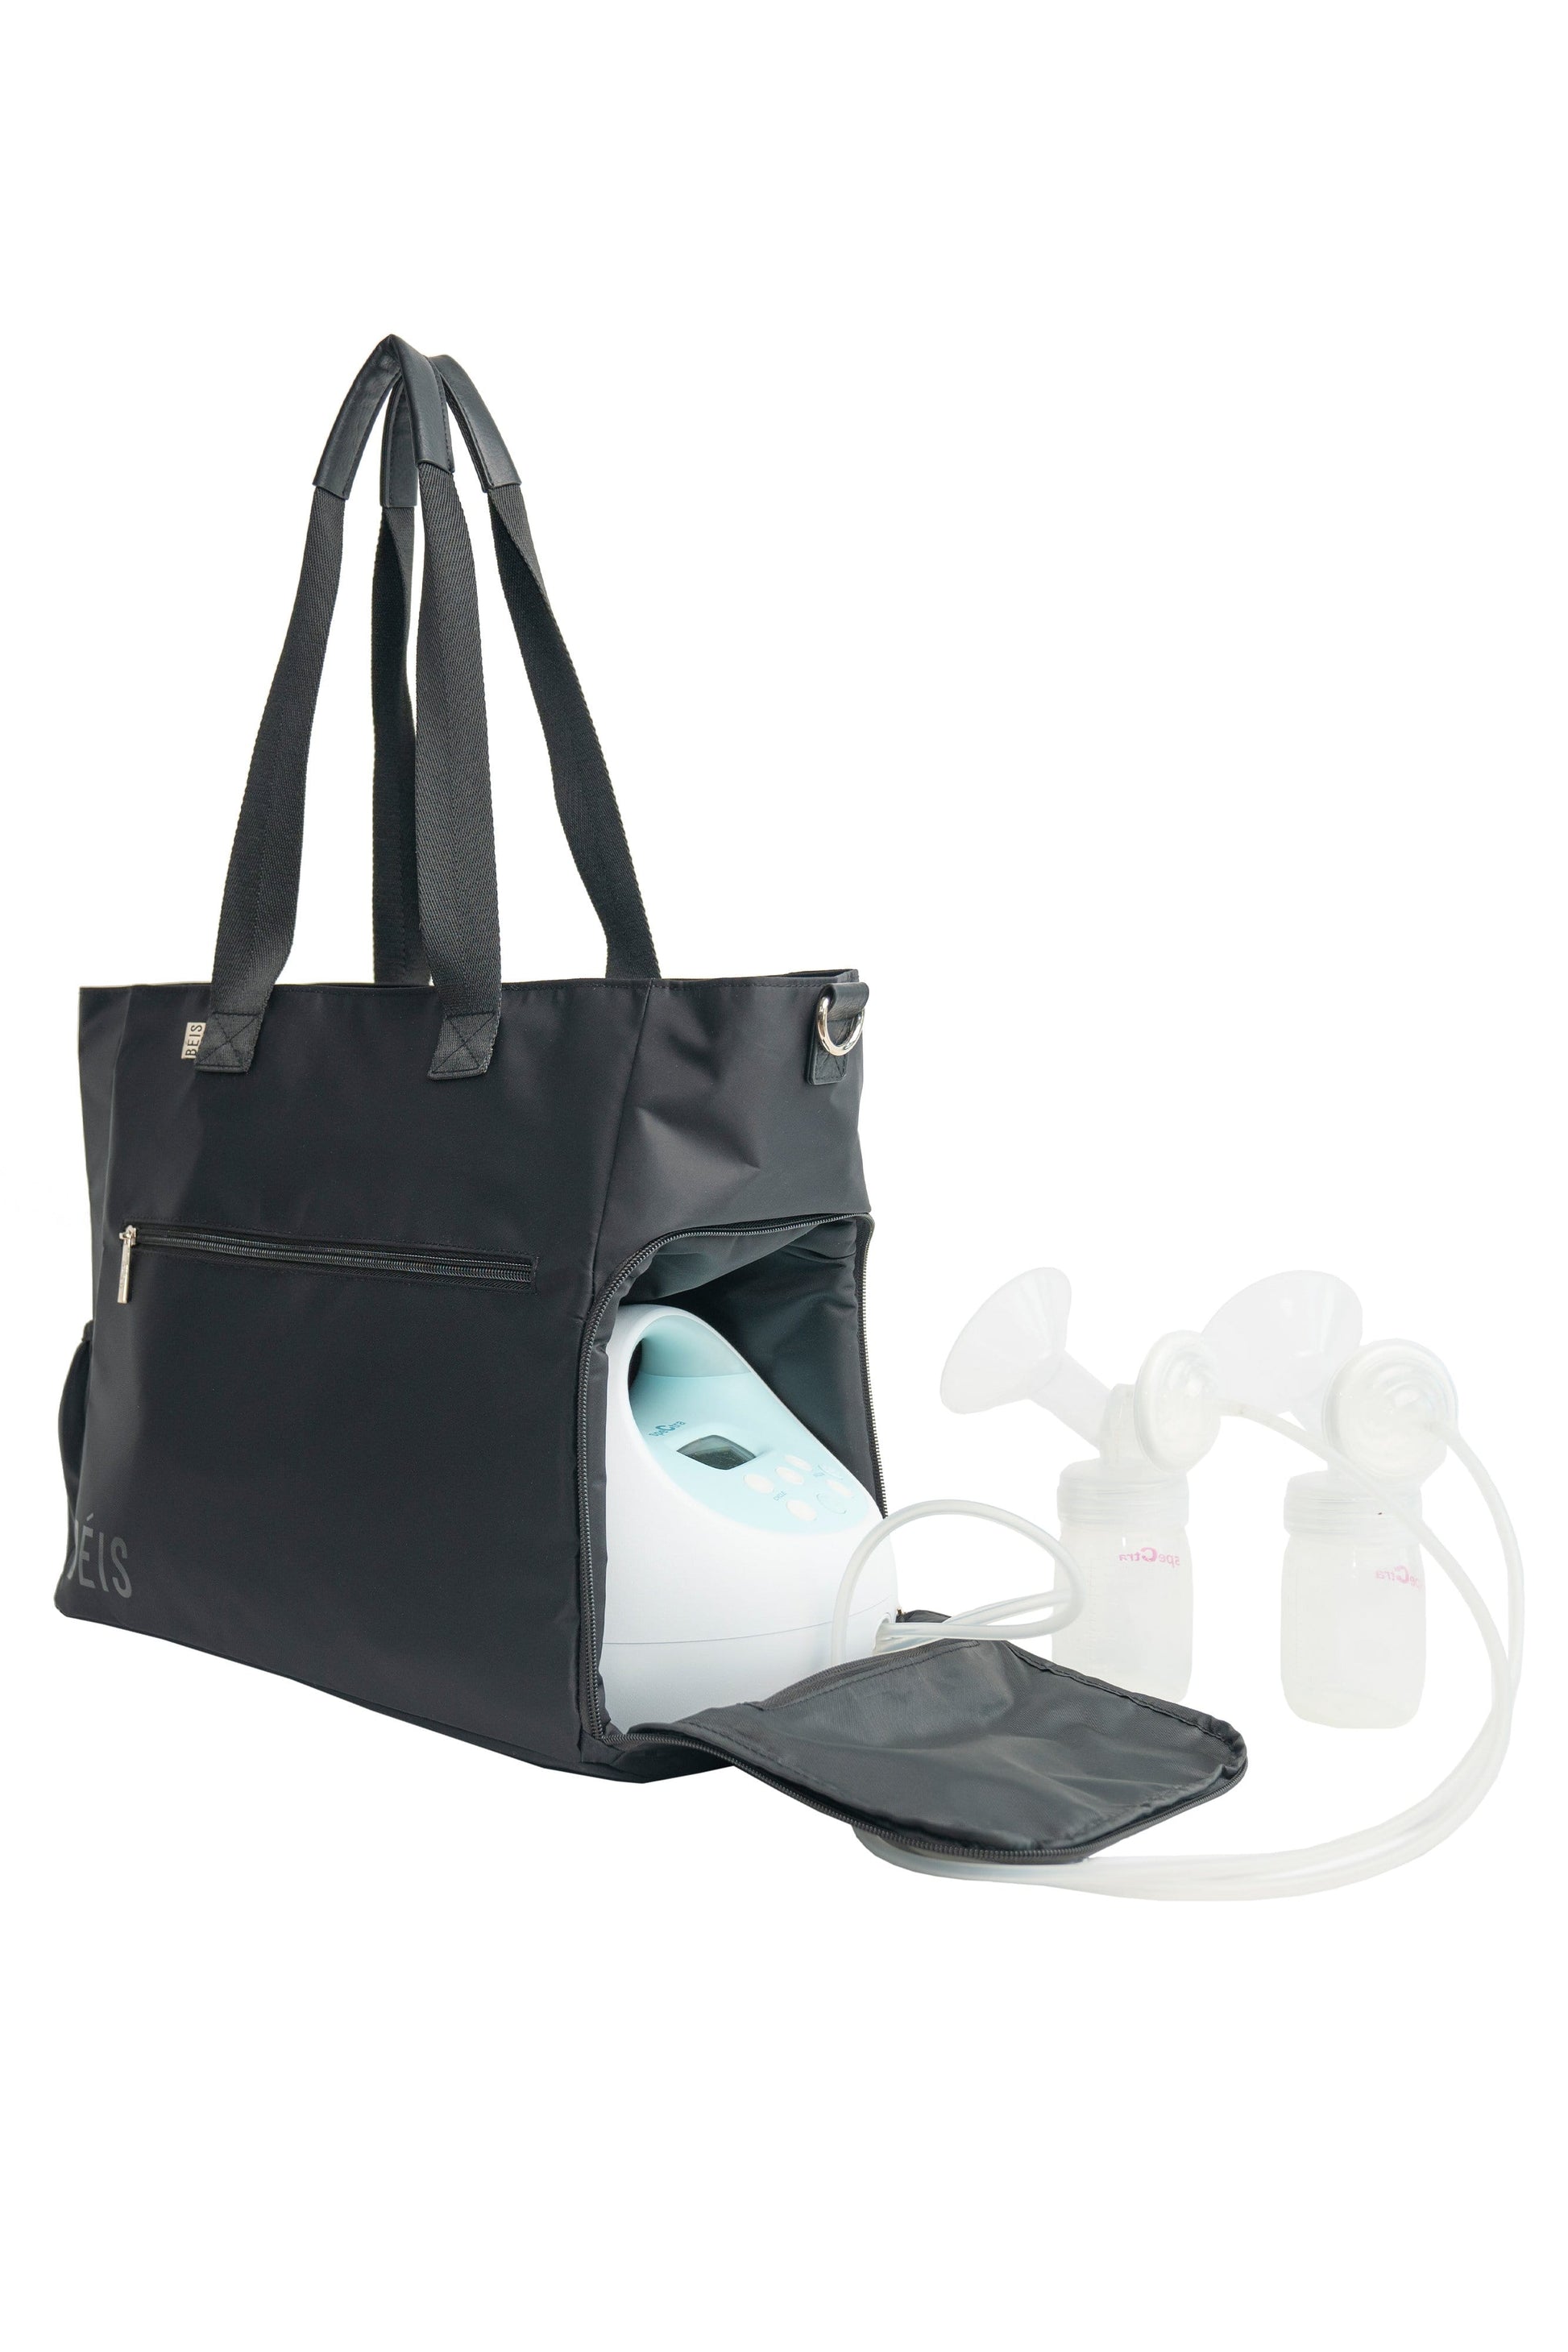 BÉIS 'The Pumping Bag' in Black - Tote Bag For Nursing & Breast Pump Gear